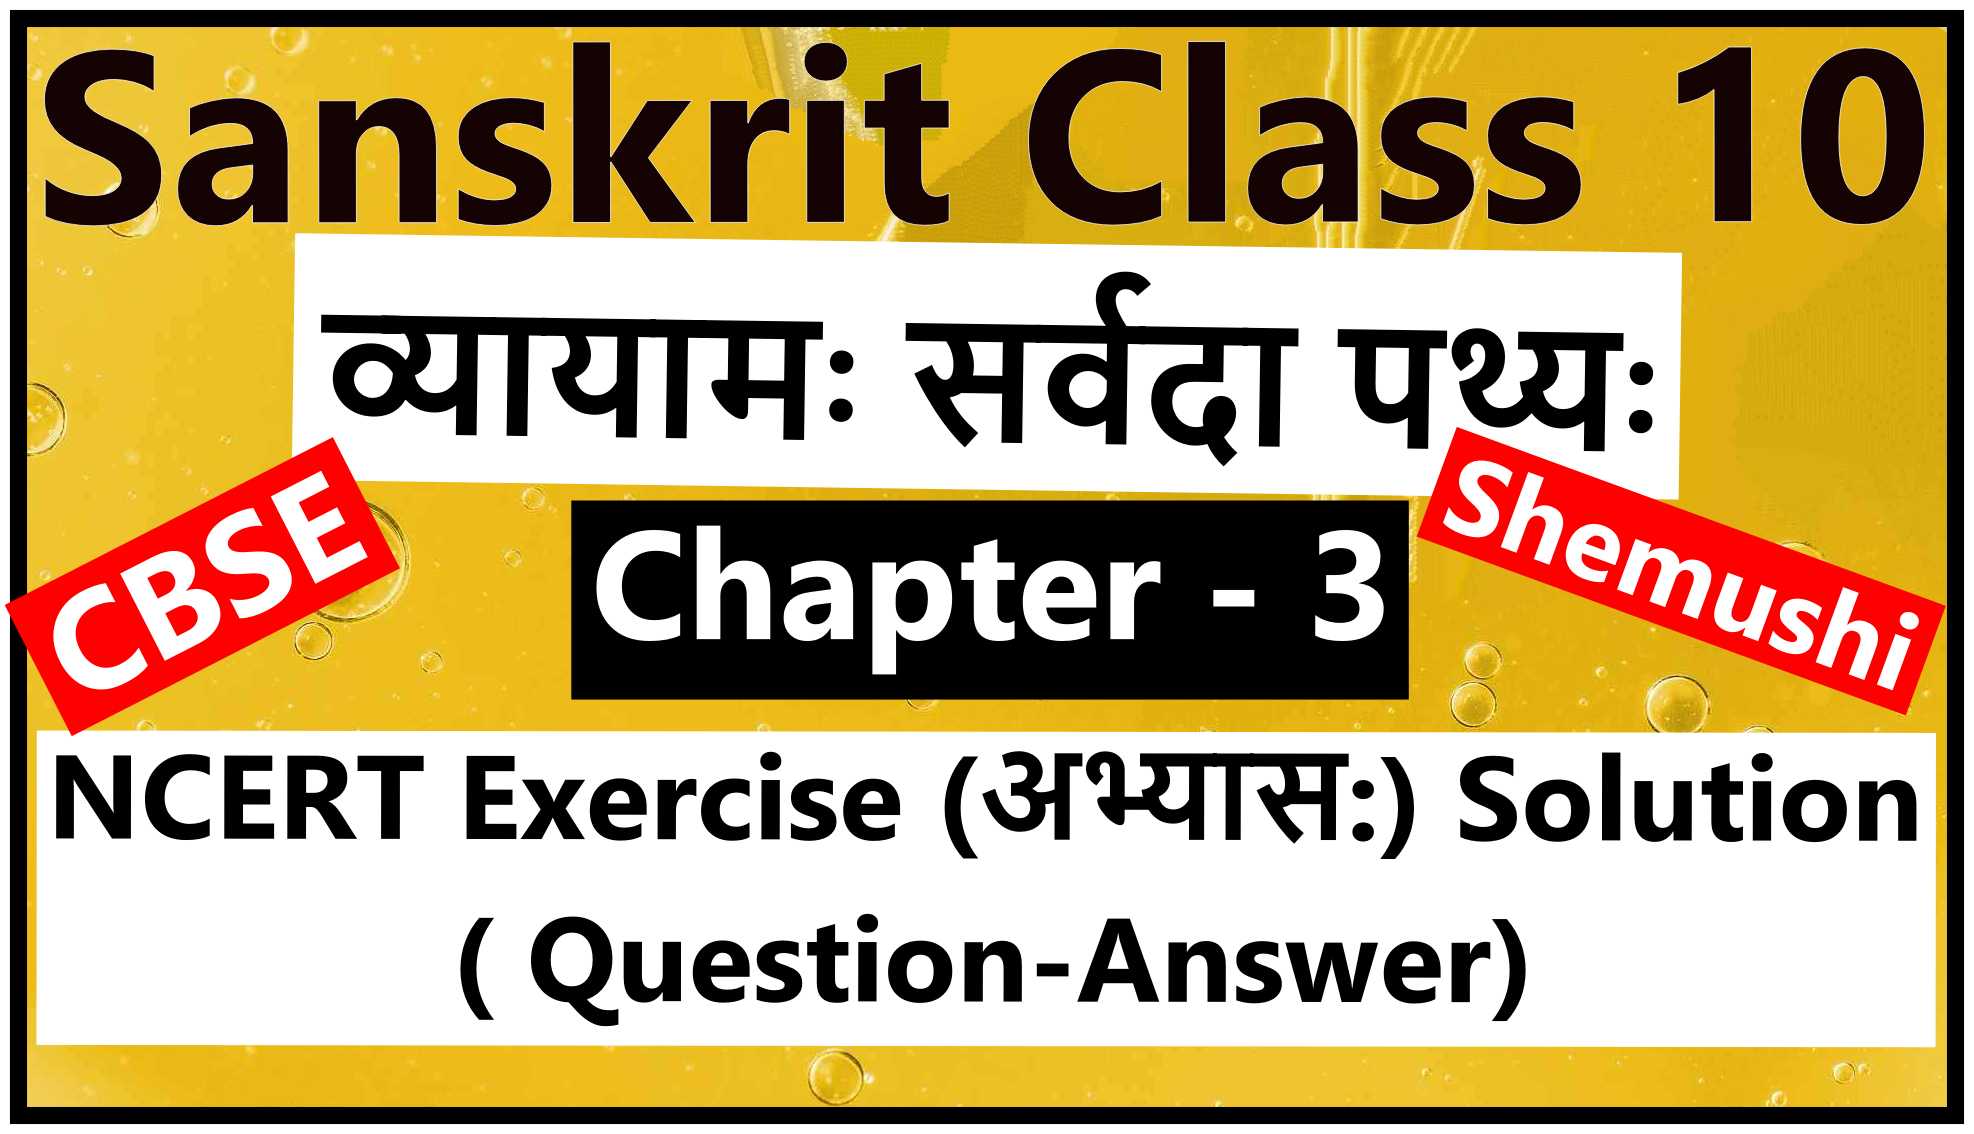 Sanskrit Class 10 - Chapter 3 - व्यायामः सर्वदा पथ्यः - NCERT Exercise Solution (Question-Answer)